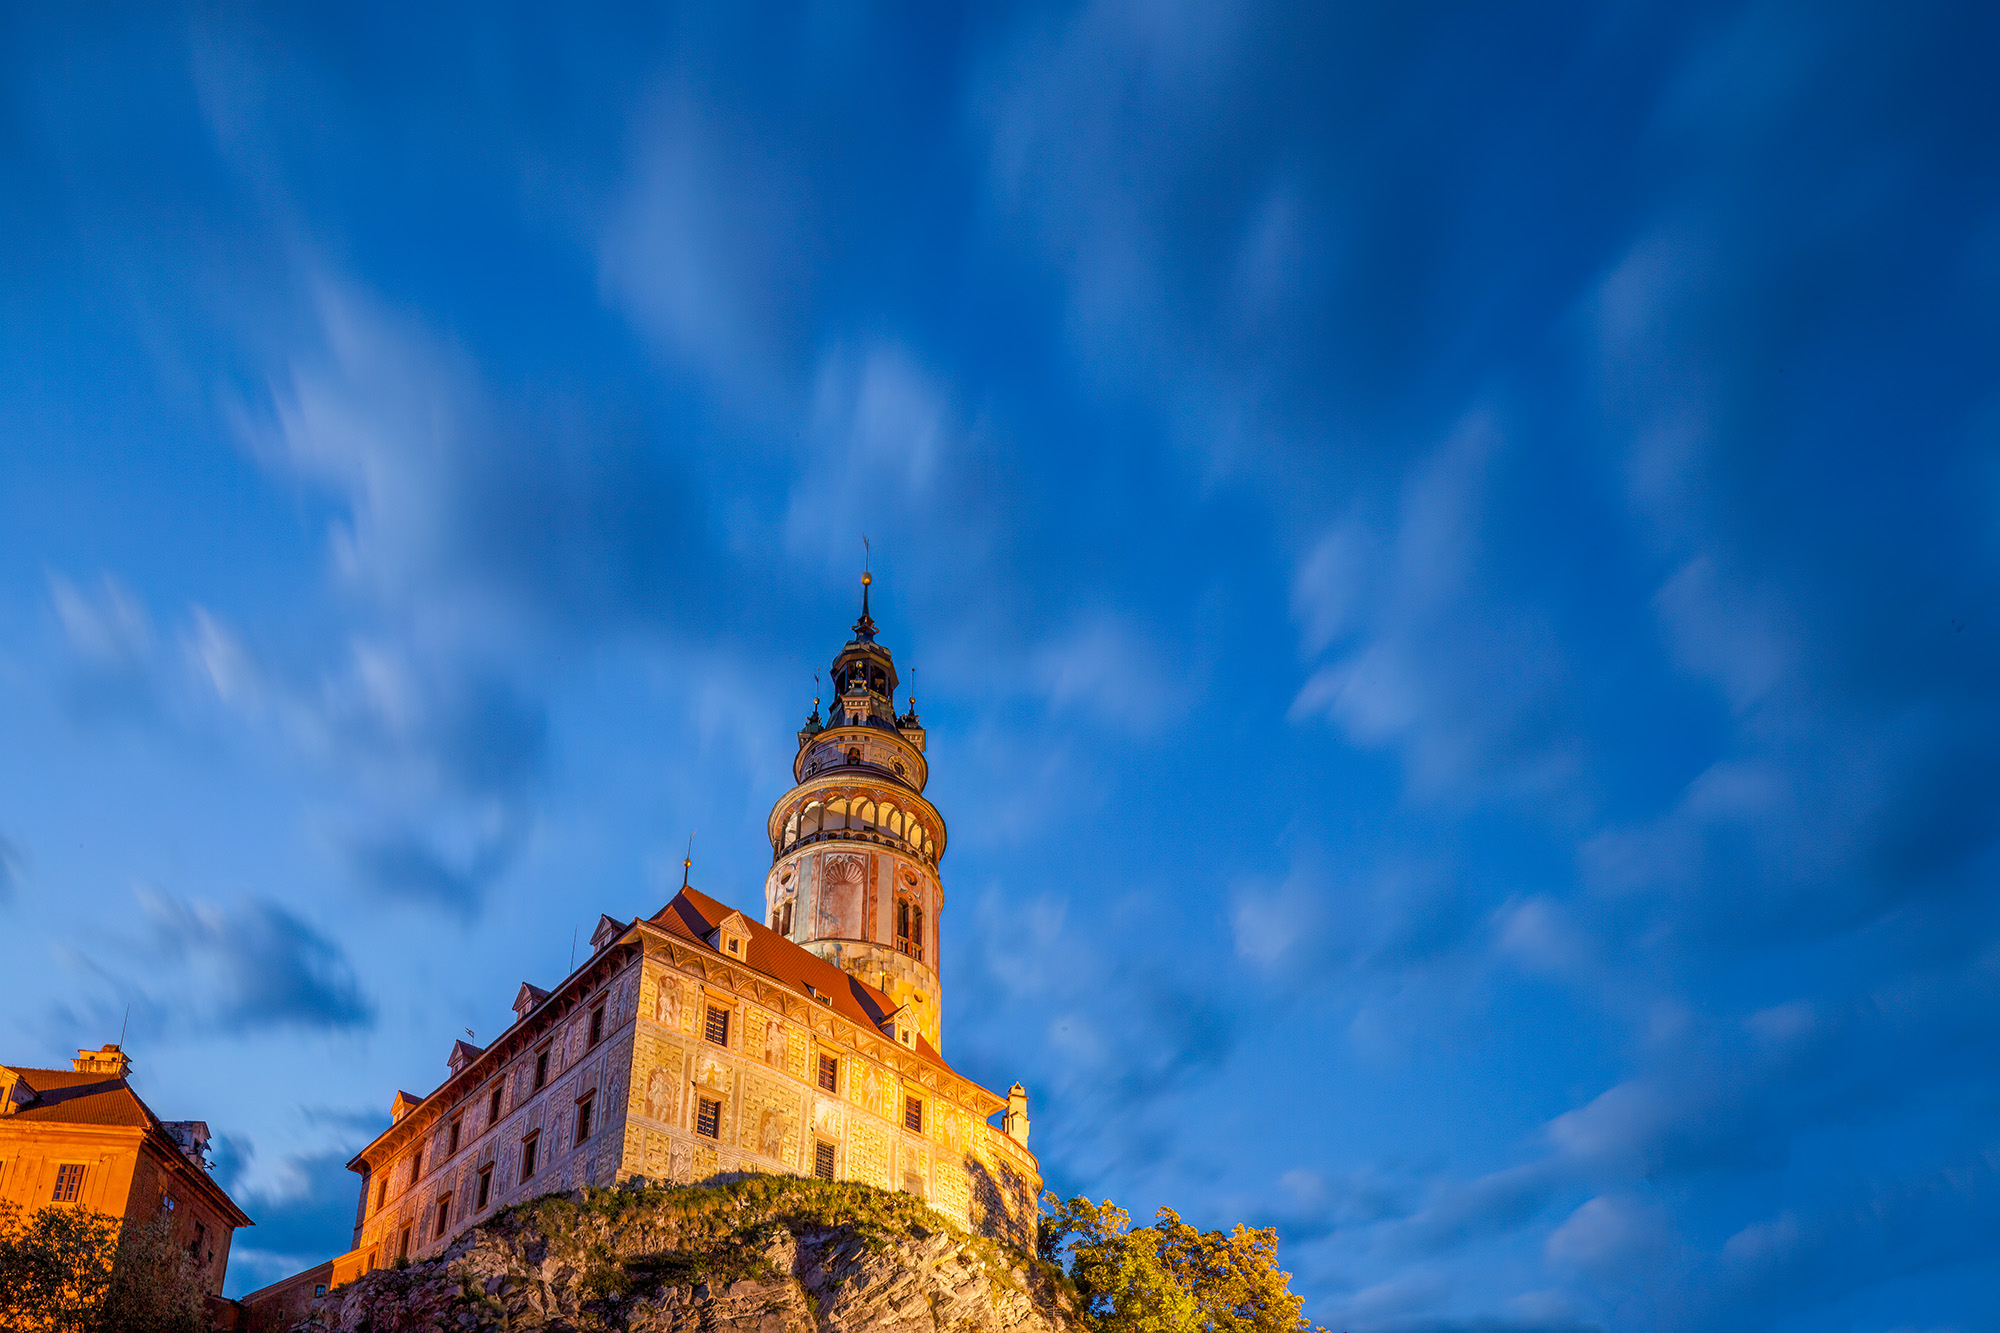 As twilight descended upon Cesky Krumlov, Czech Republic, I captured the resplendent Cesky Krumlov Castle in all its grandeur...